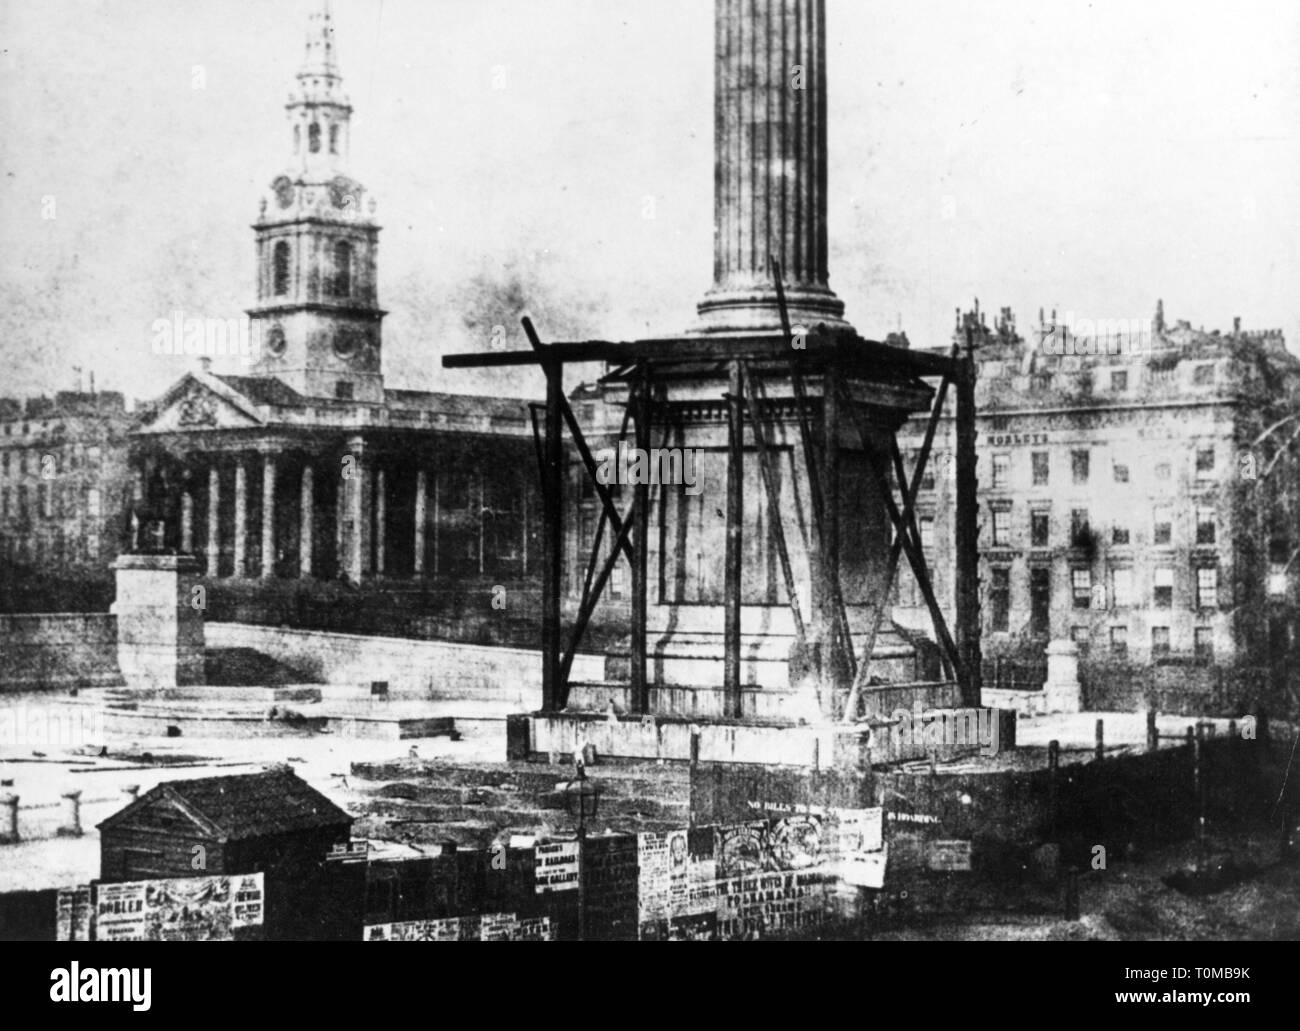 Fotografie, Foto, 'Nelson's Column im Bau, der Trafalgar Square" von Henry Fox Talbot (1800 - 1877), April 1844, Additional-Rights - Clearance-Info - Not-Available Stockfoto